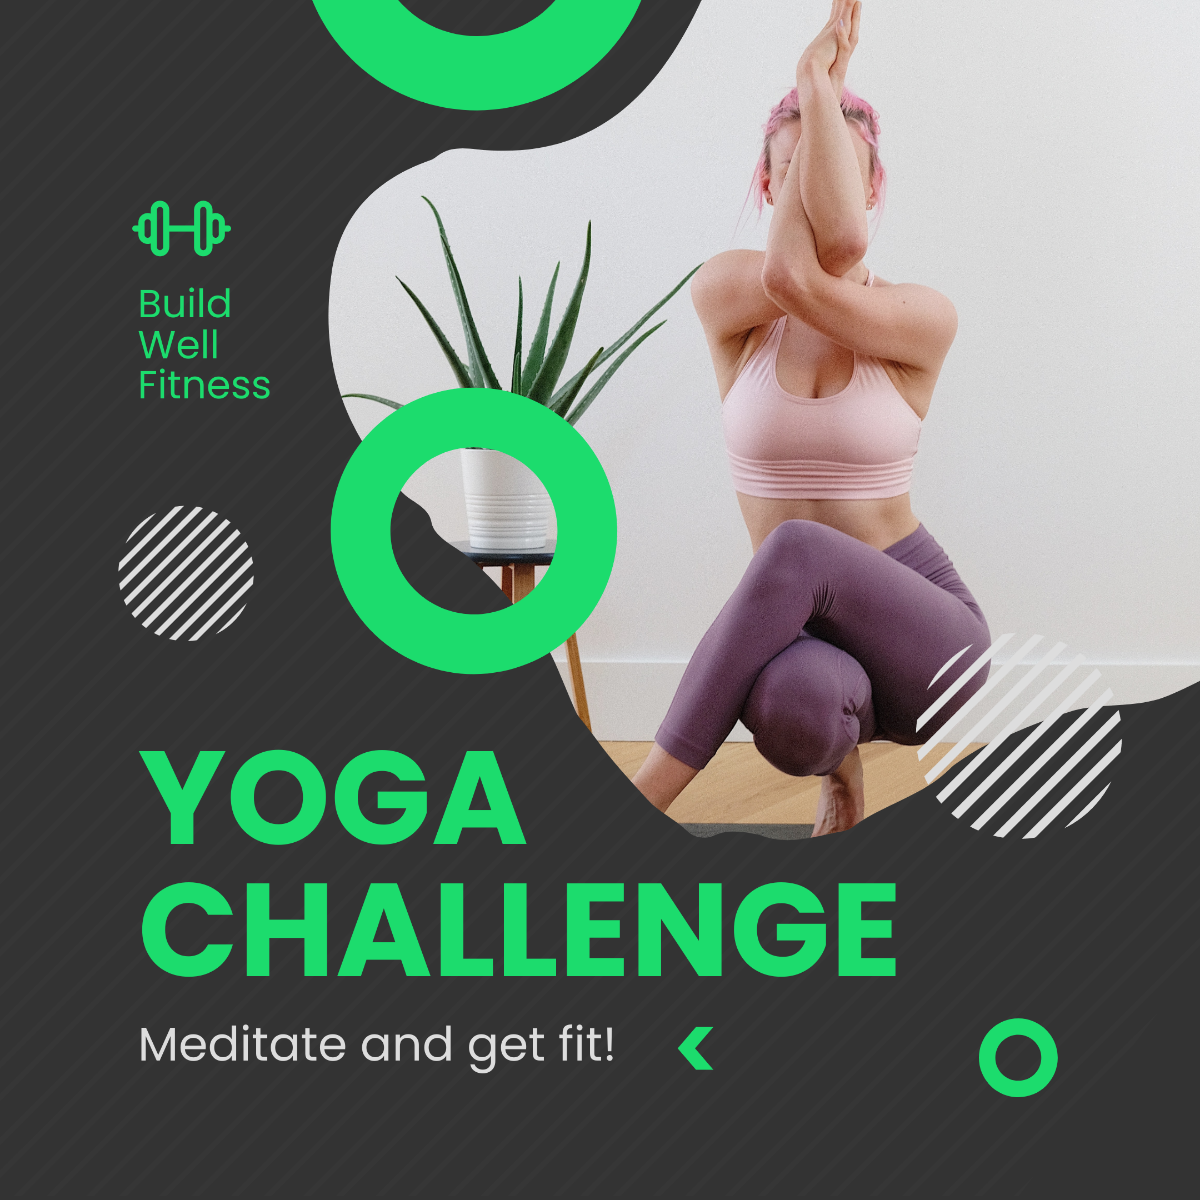 Yoga Challenge Post, Instagram, Facebook